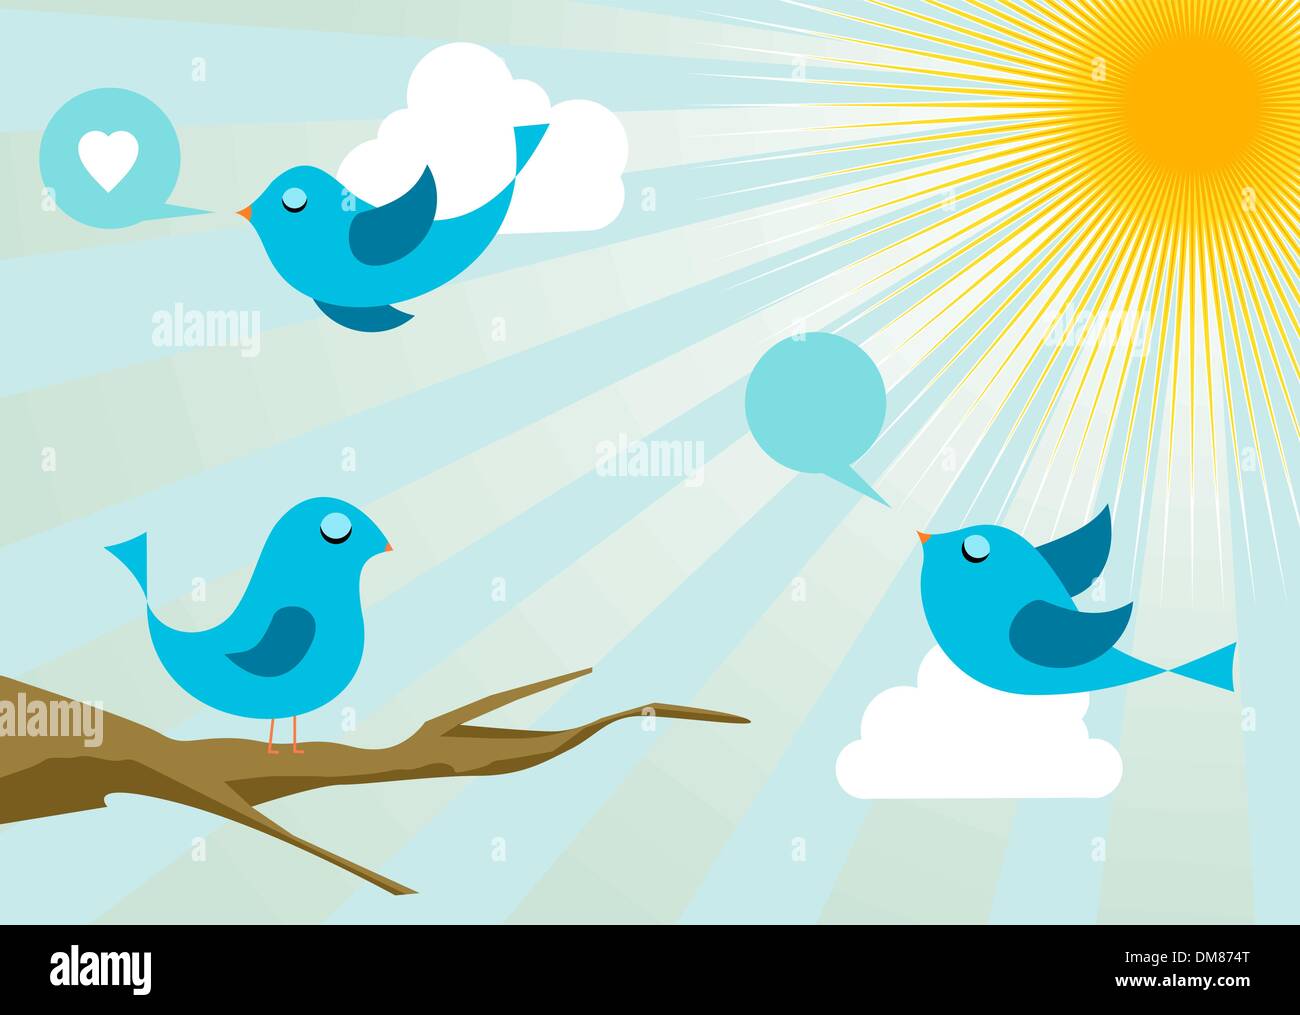 Twitter birds at social media sunrise Stock Vector